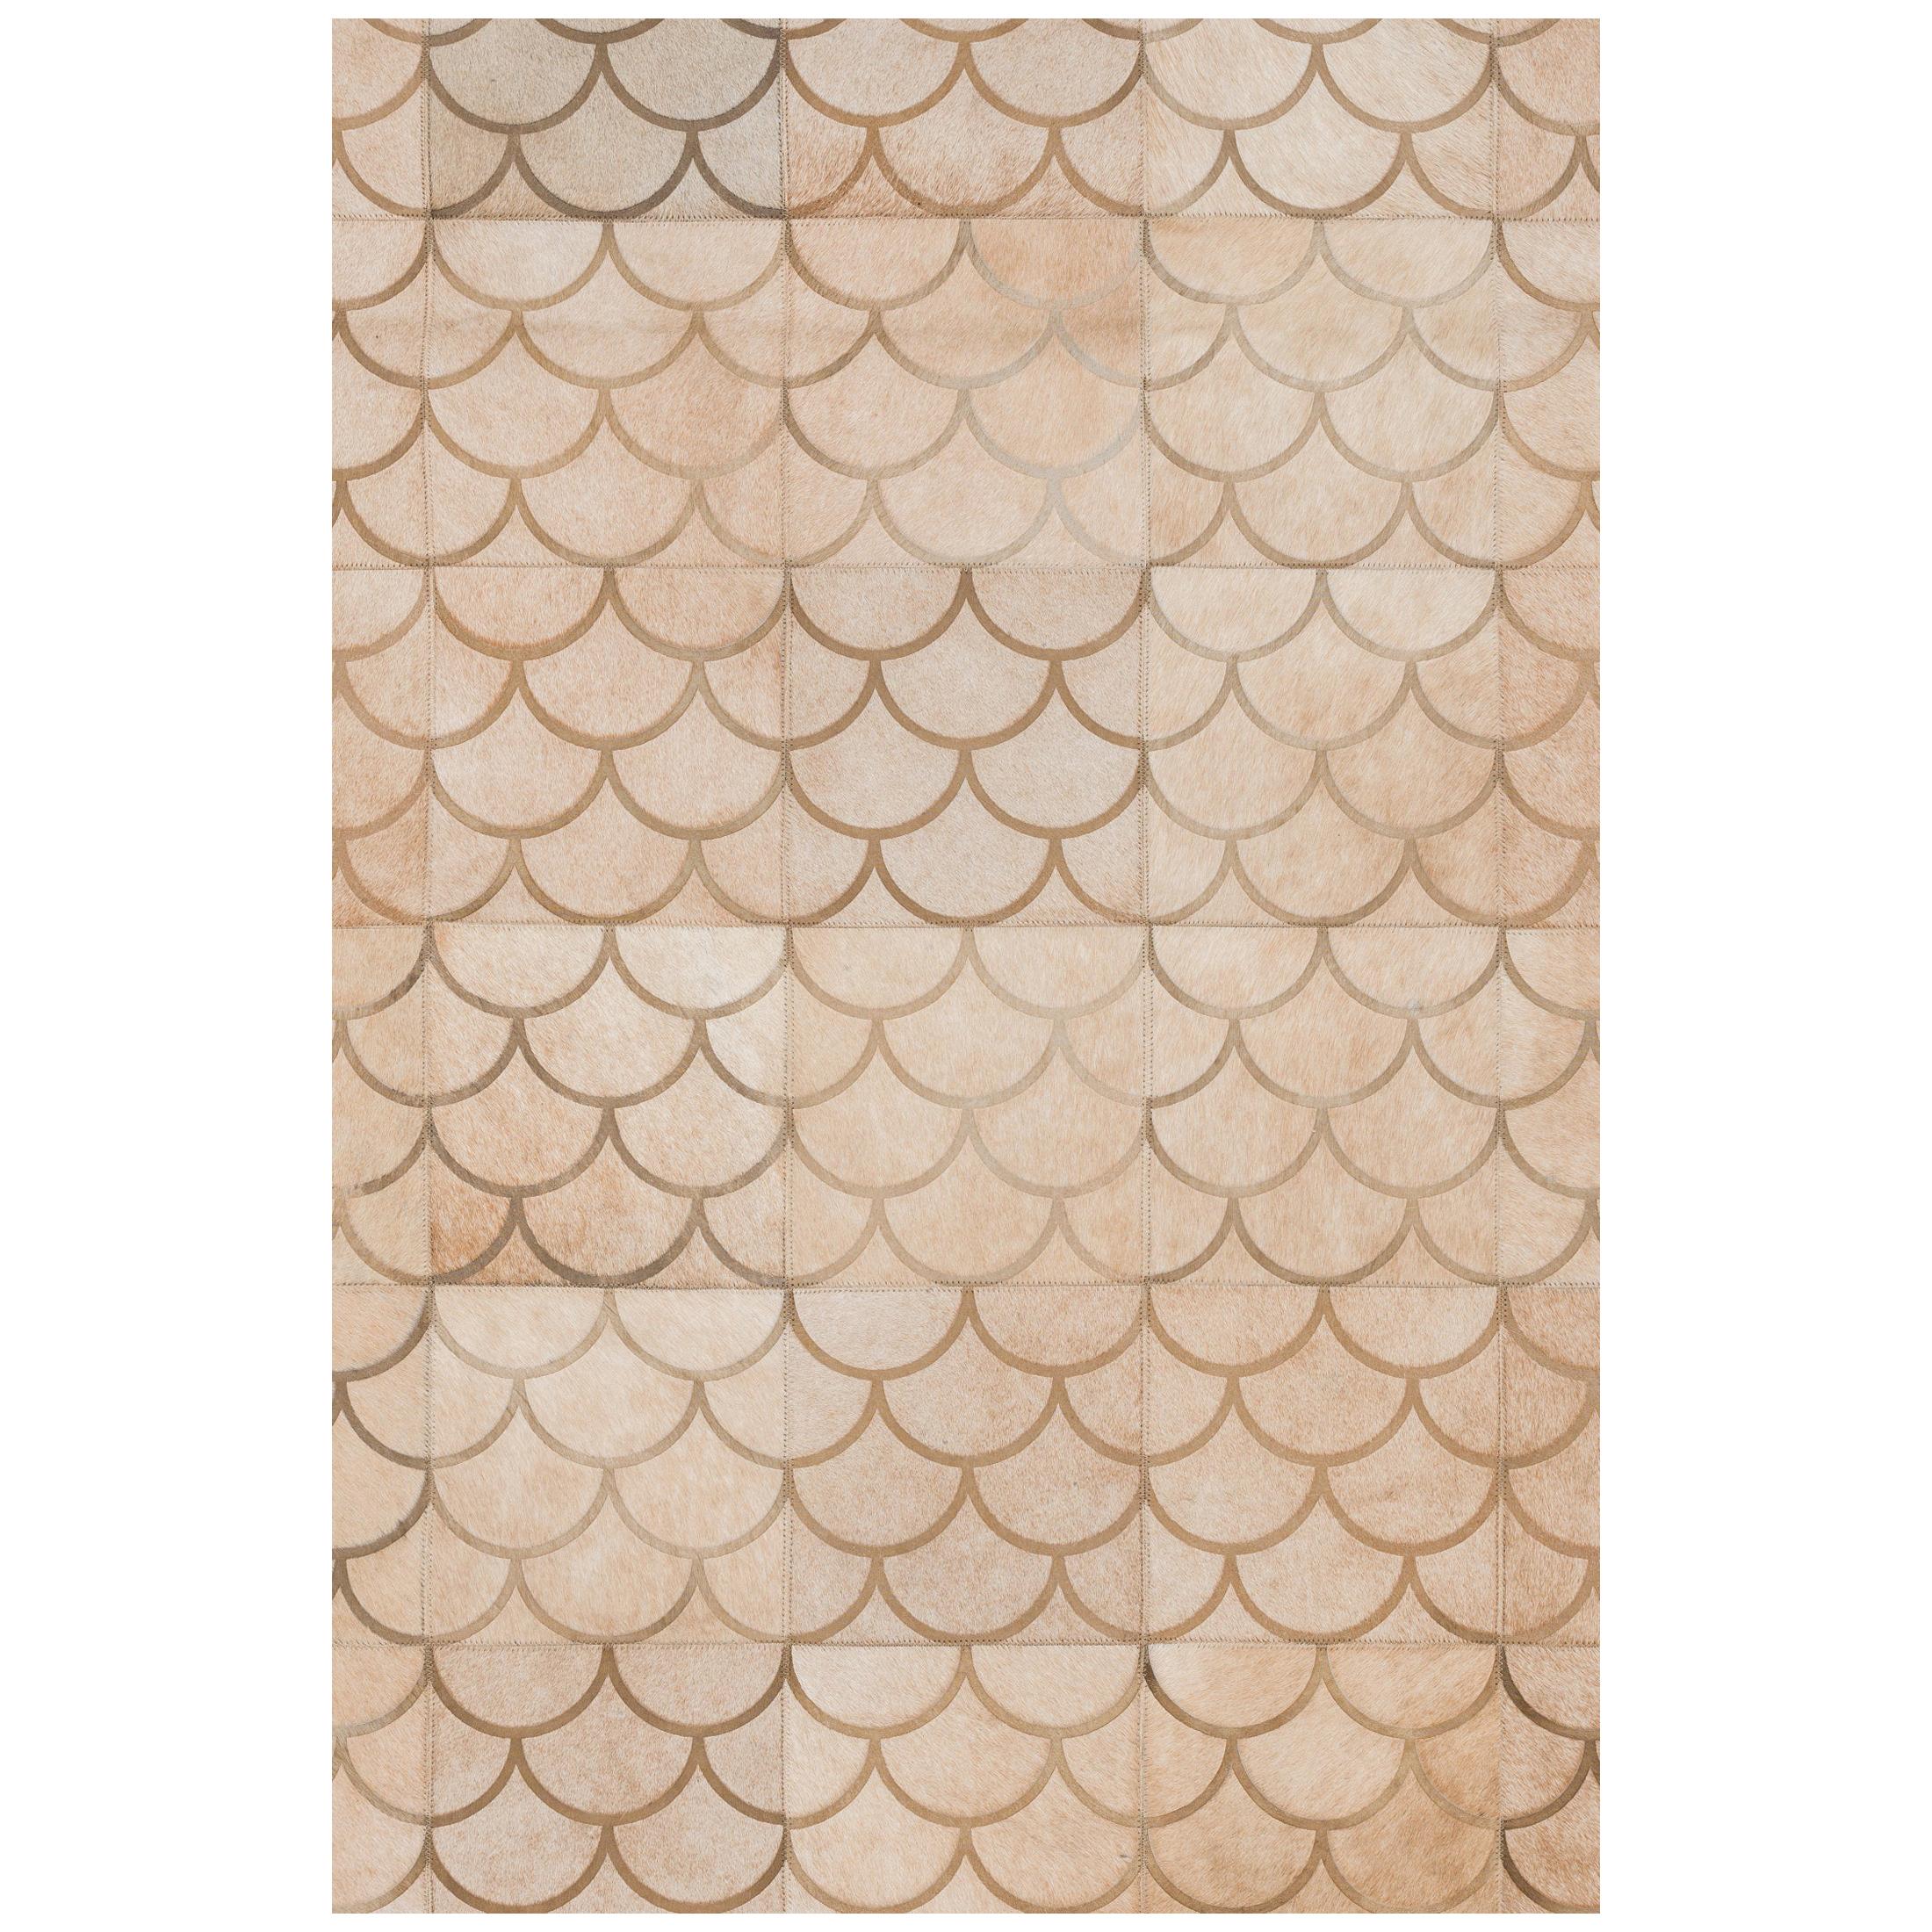 Scallop crescent pattern Customizable Luneta Cowhide Area Floor Rug Medium 